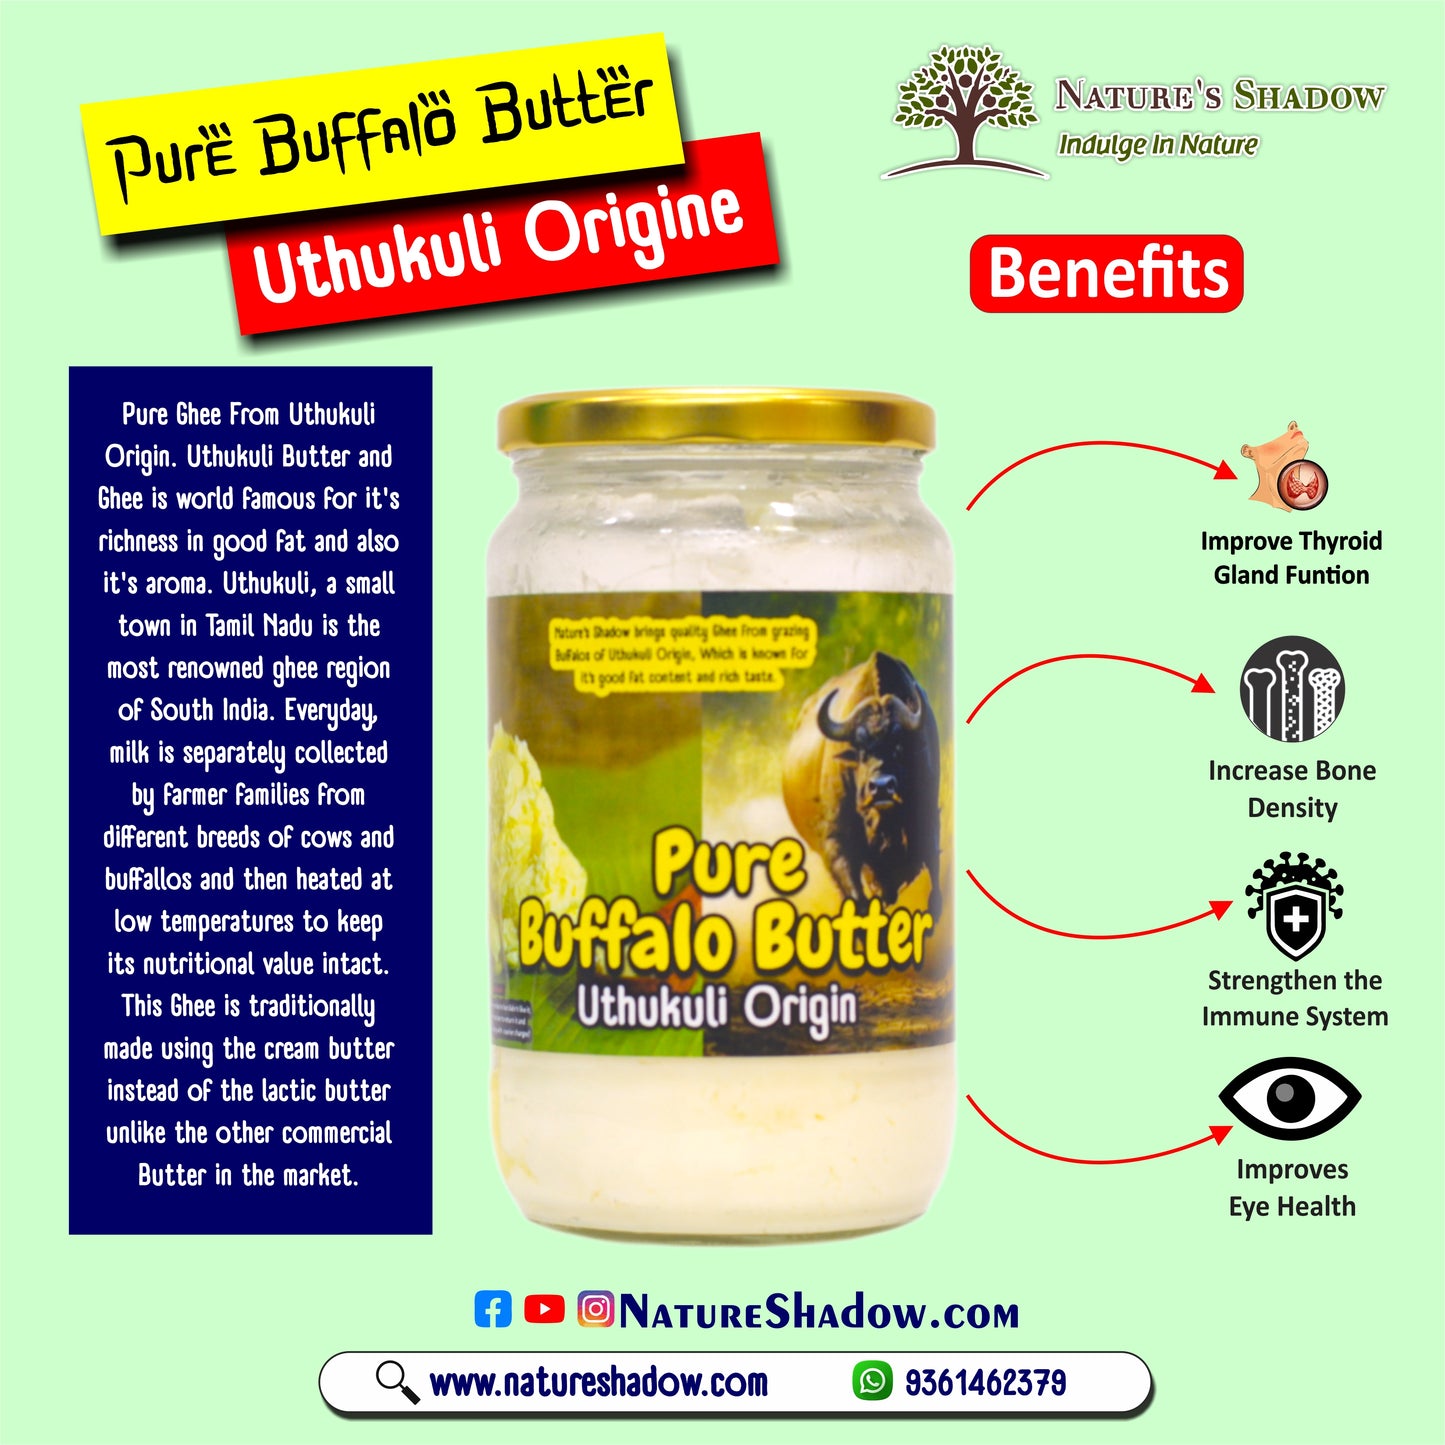 Pure Uthukulli Origin Buffalo Butter